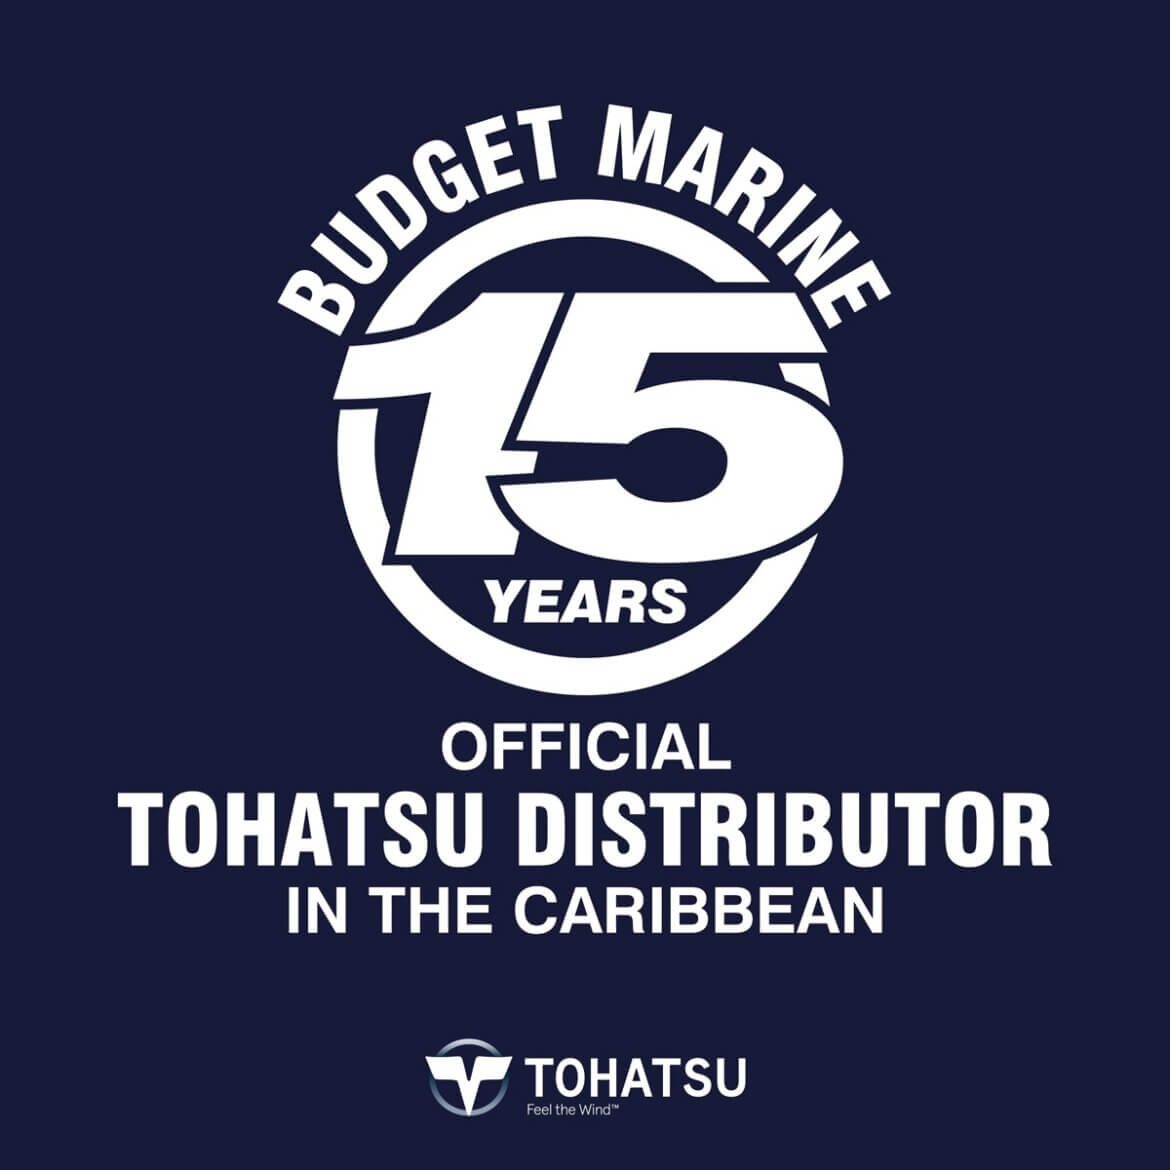 Budget Marine Grenada 16